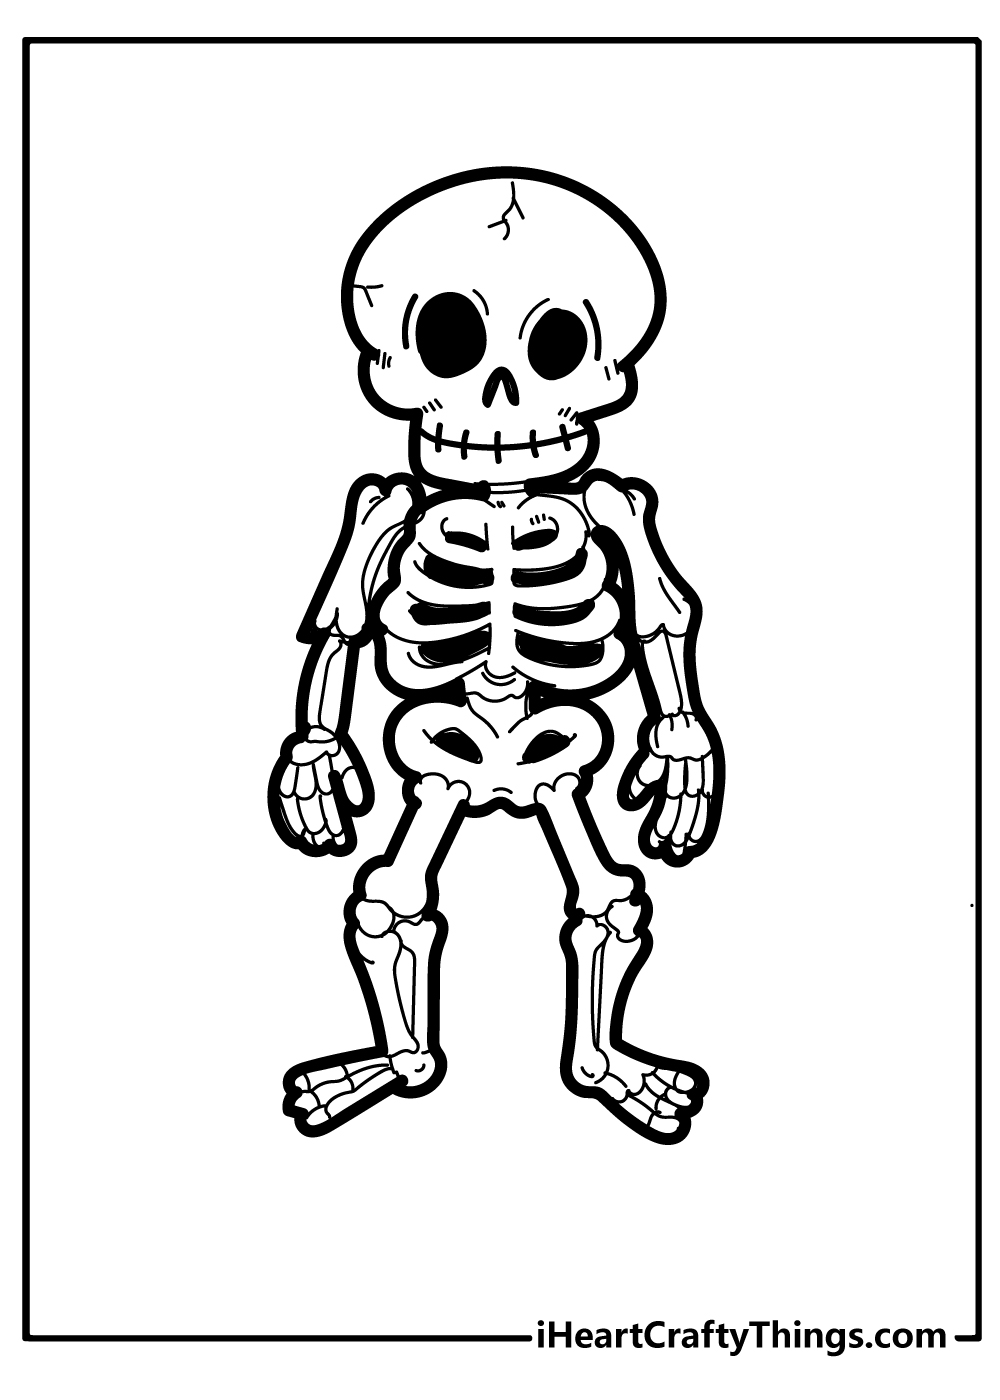 Skeleton Coloring Original Sheet for children free download